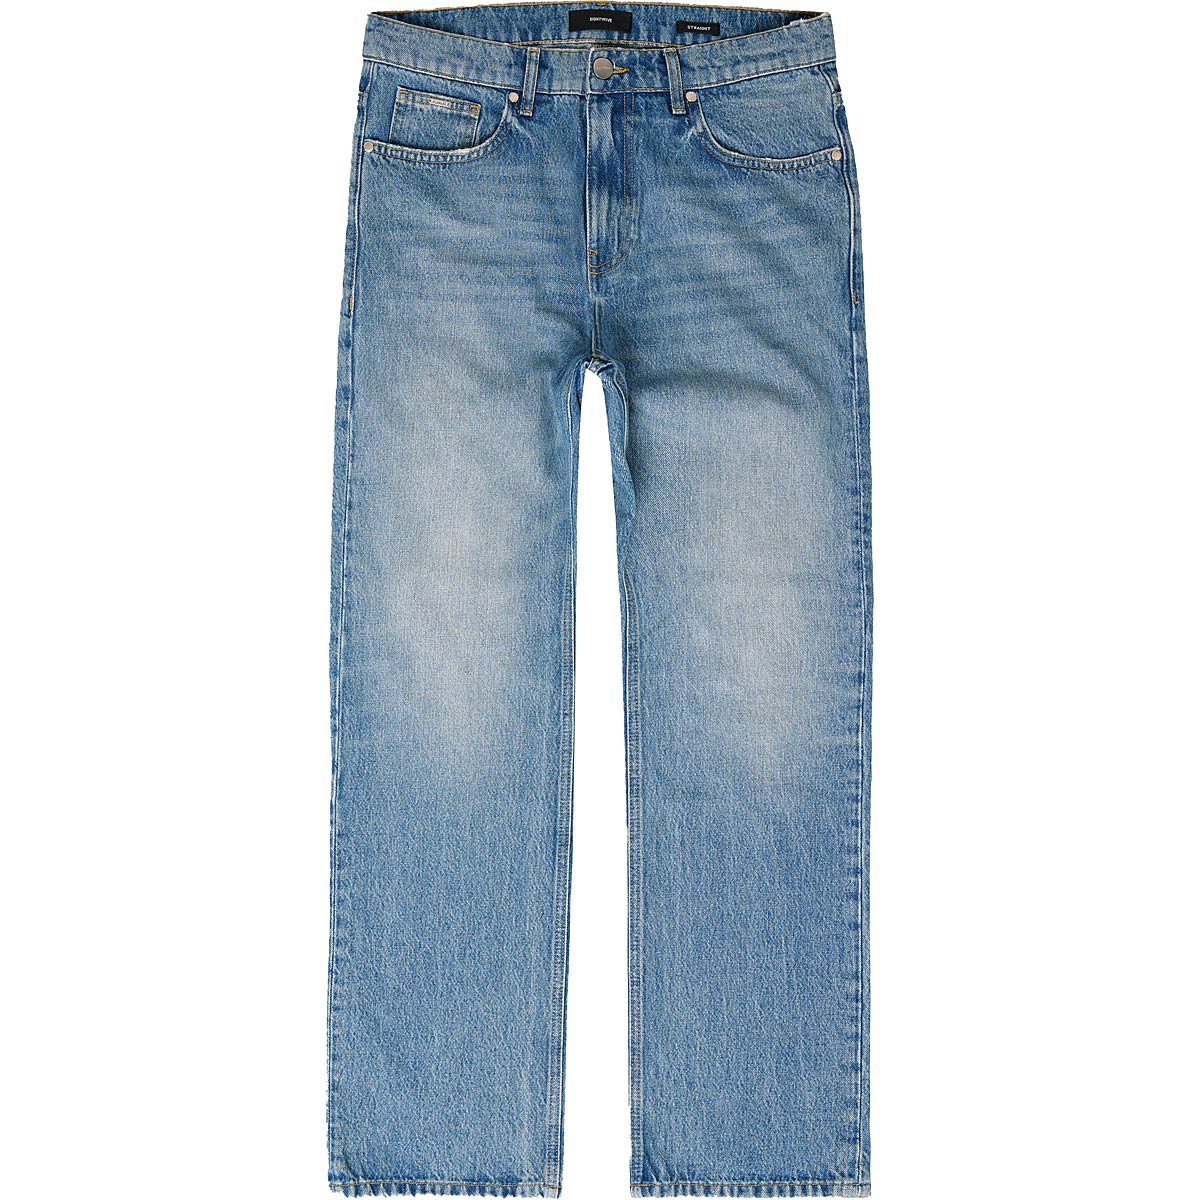 Image of Eightyfive Distressed Jeans, Light Wash Denim